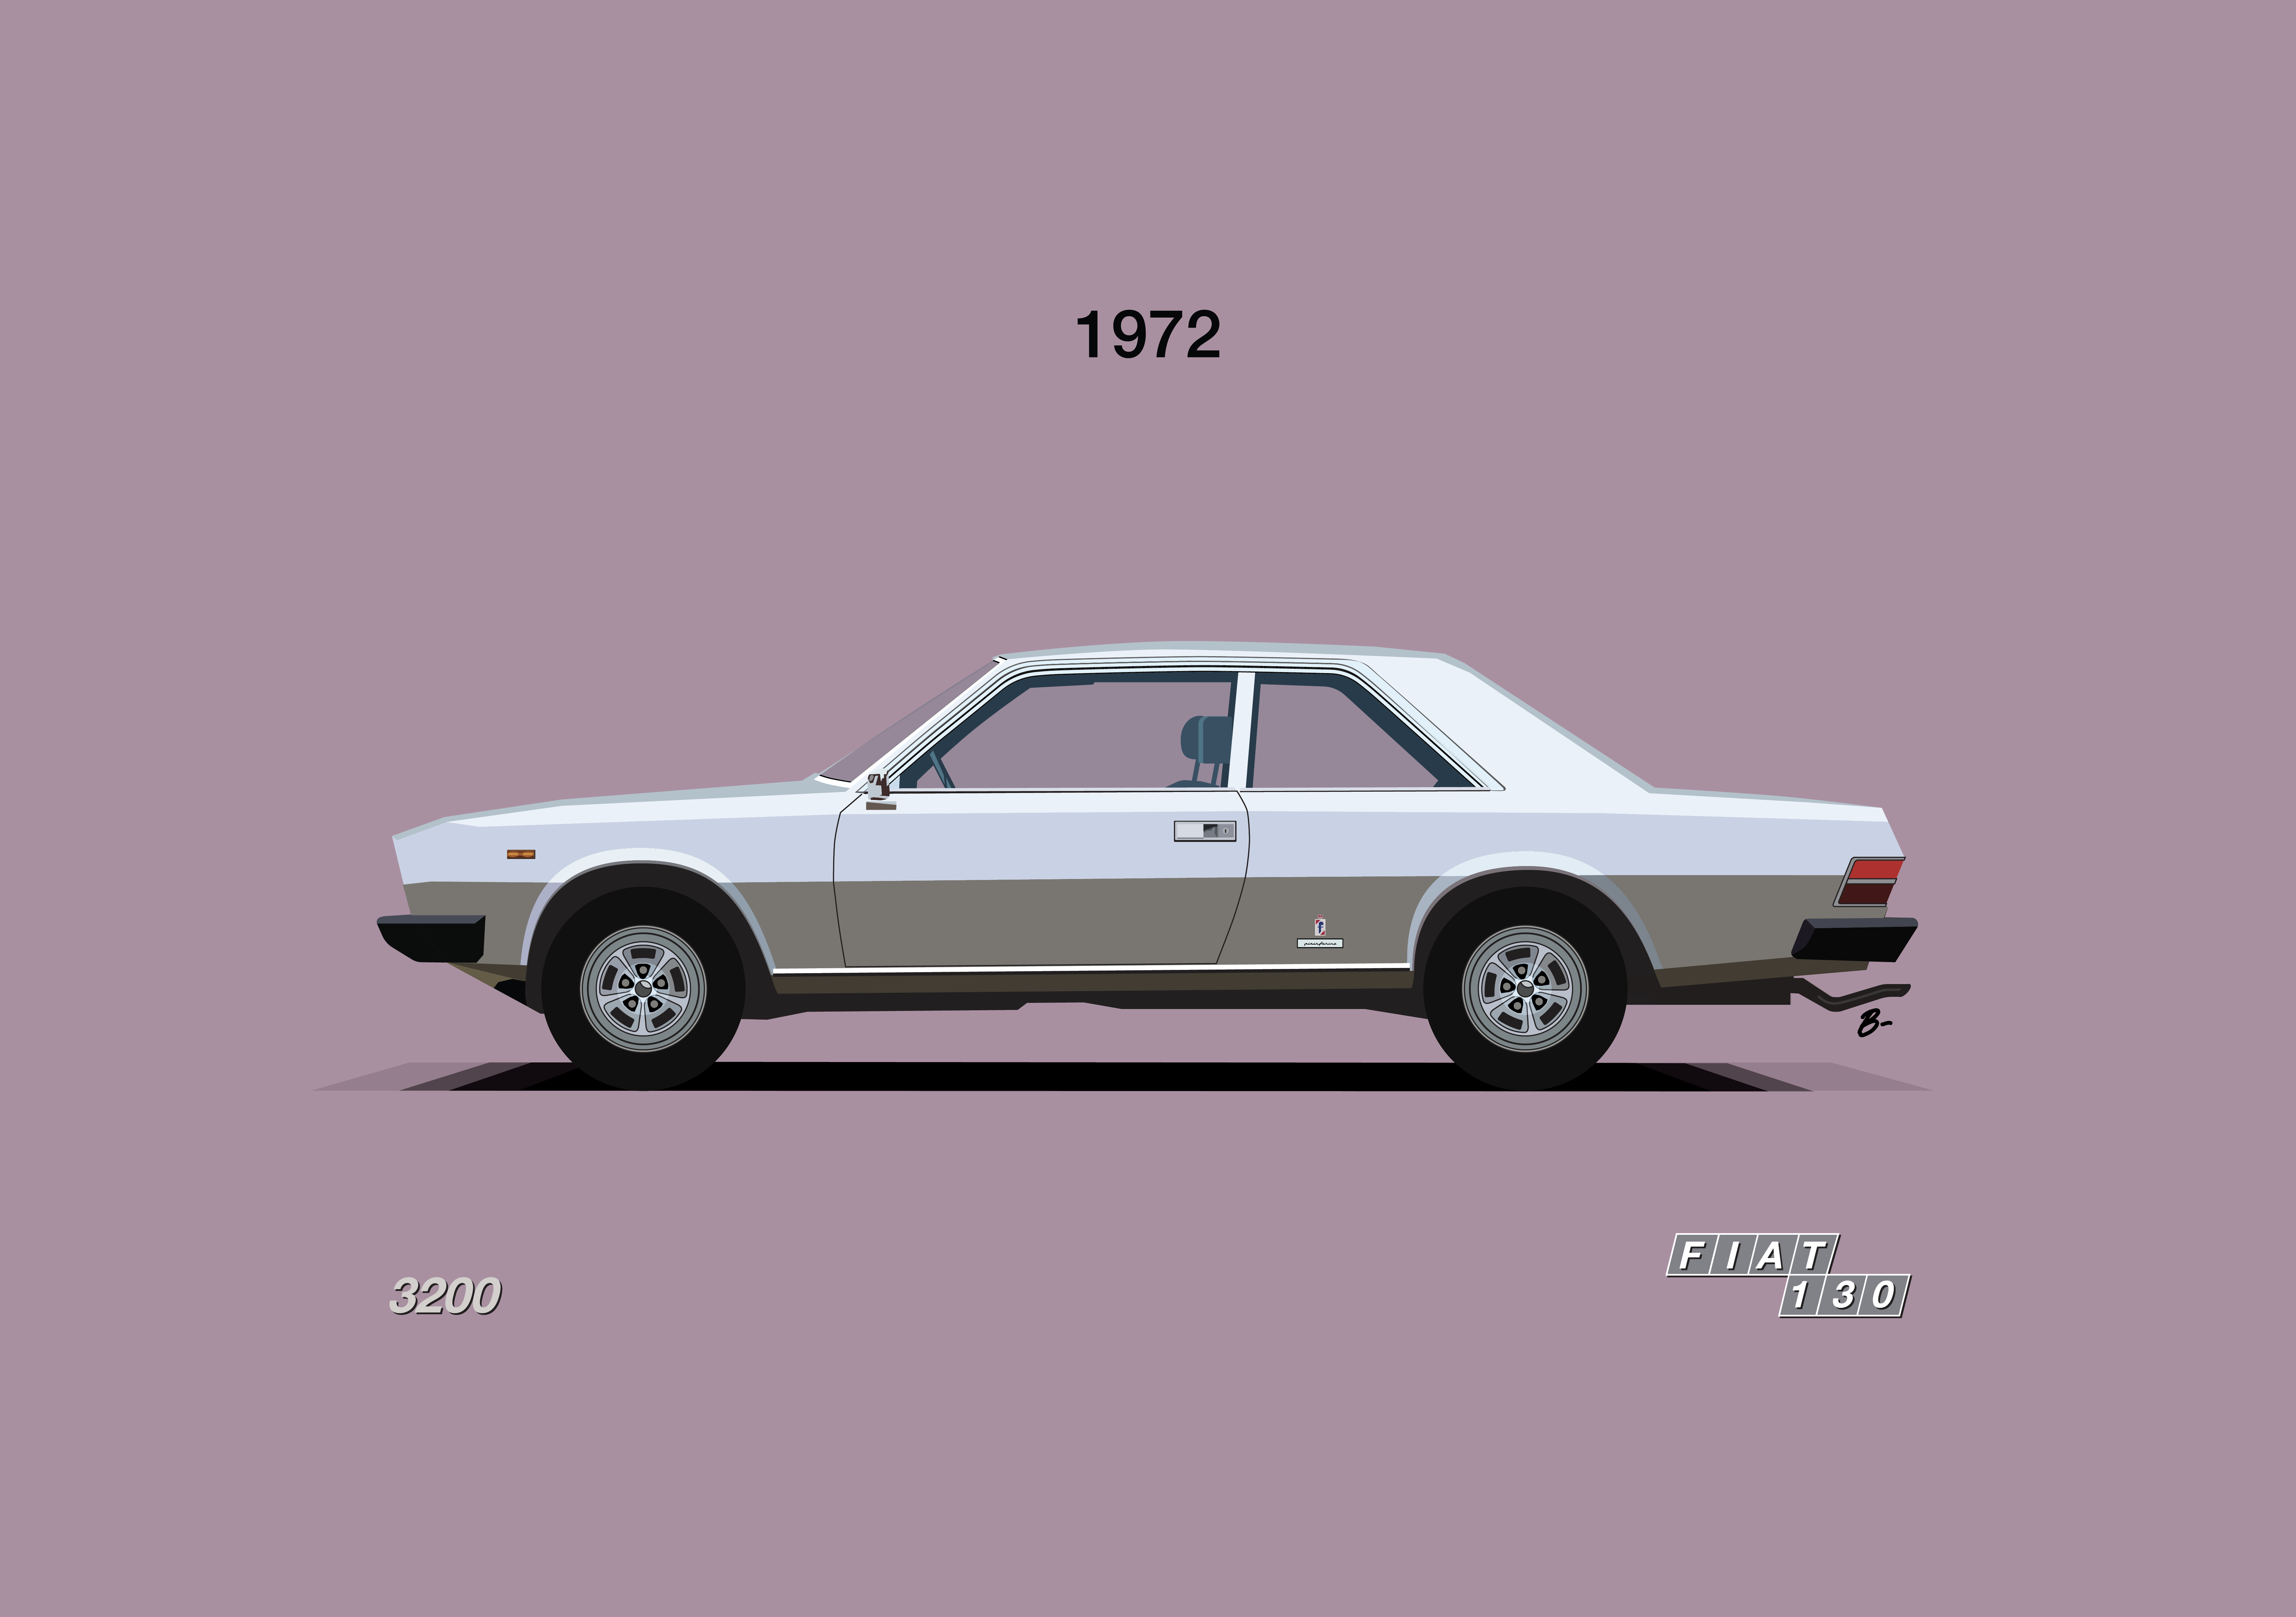 FIAT 130 COUPE 3200 - 1972 - MORGAN BERDER